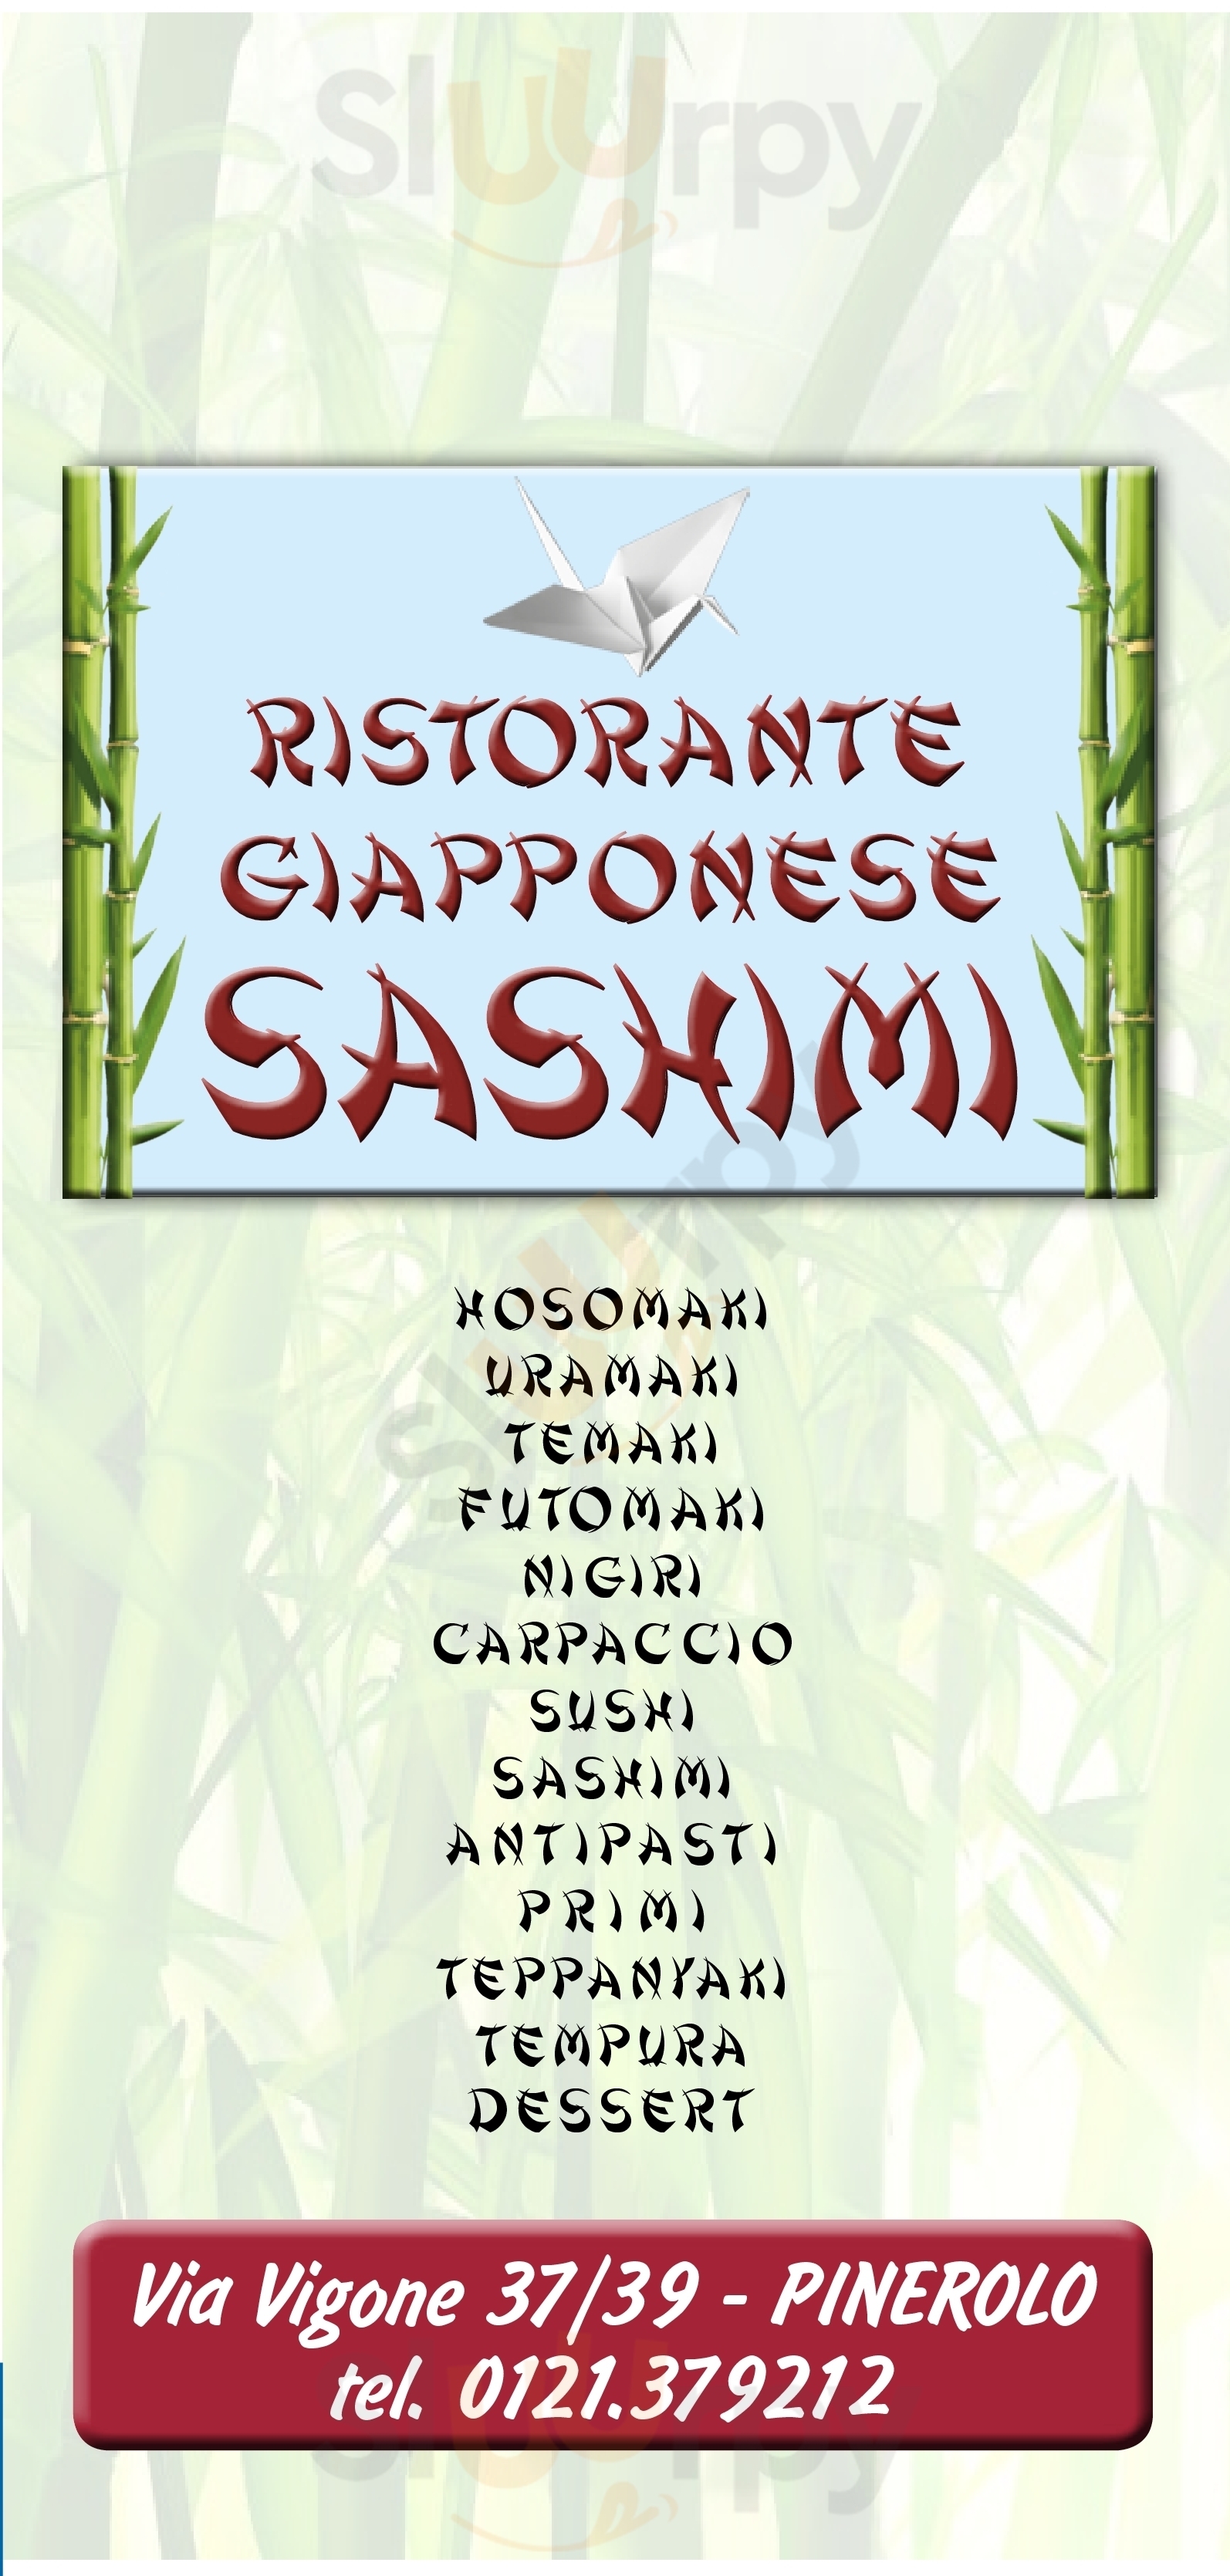 Ristorante Sashimi Pinerolo menù 1 pagina